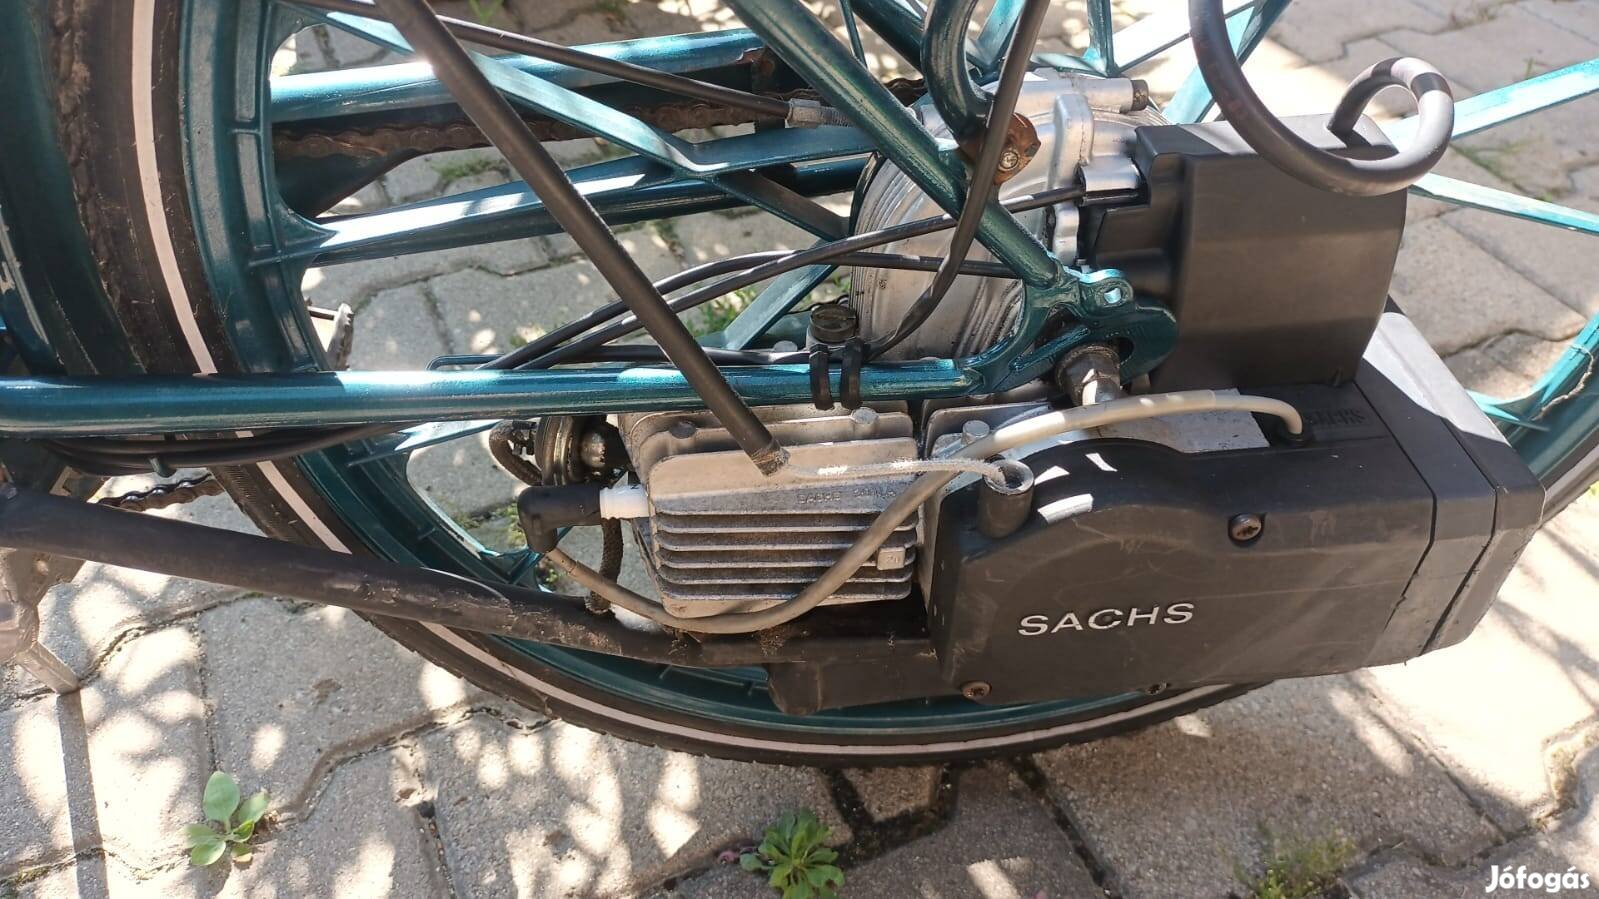 Sachs kerékpár